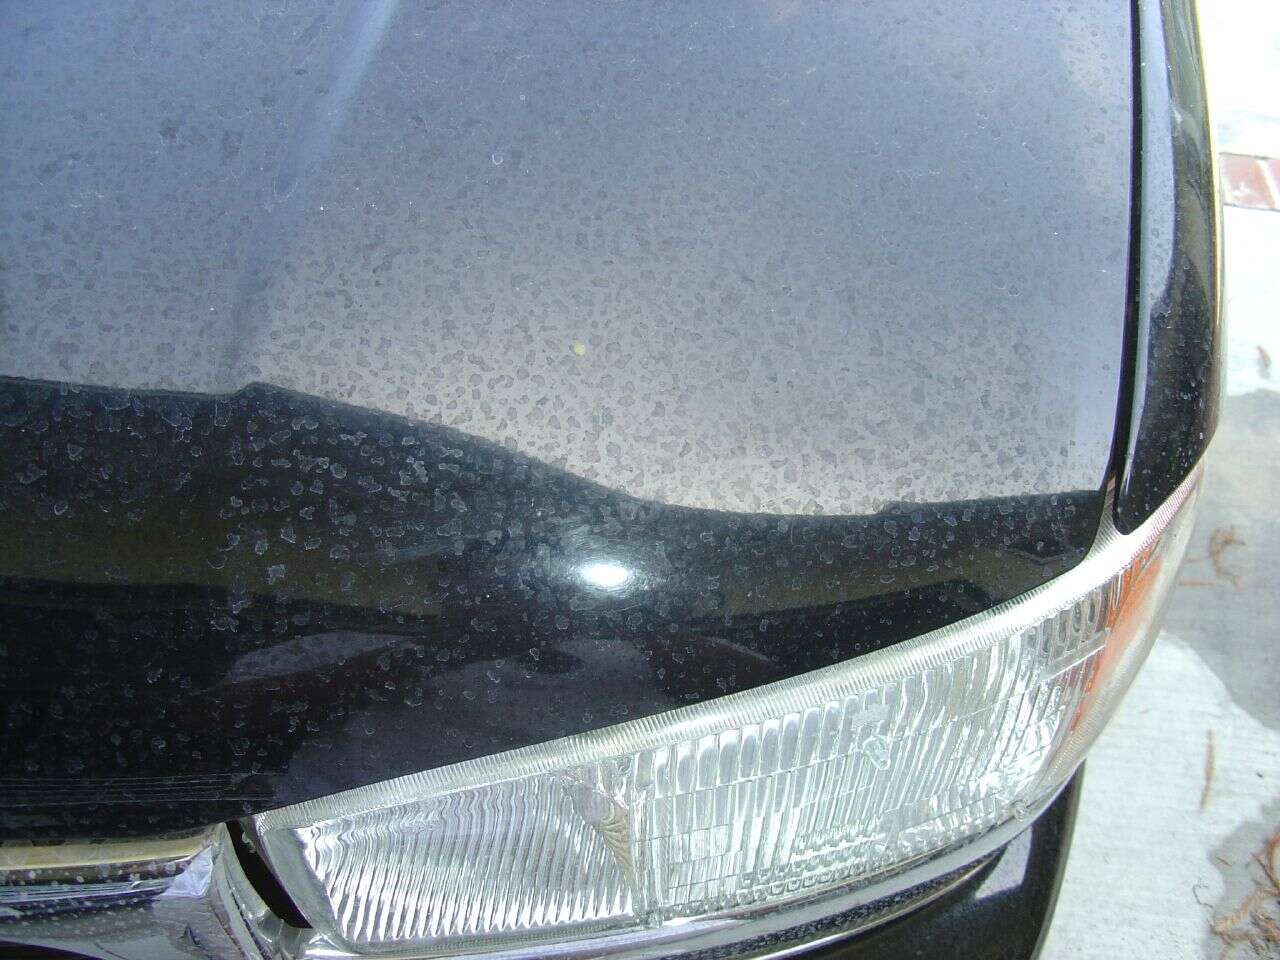 Water spots on a car